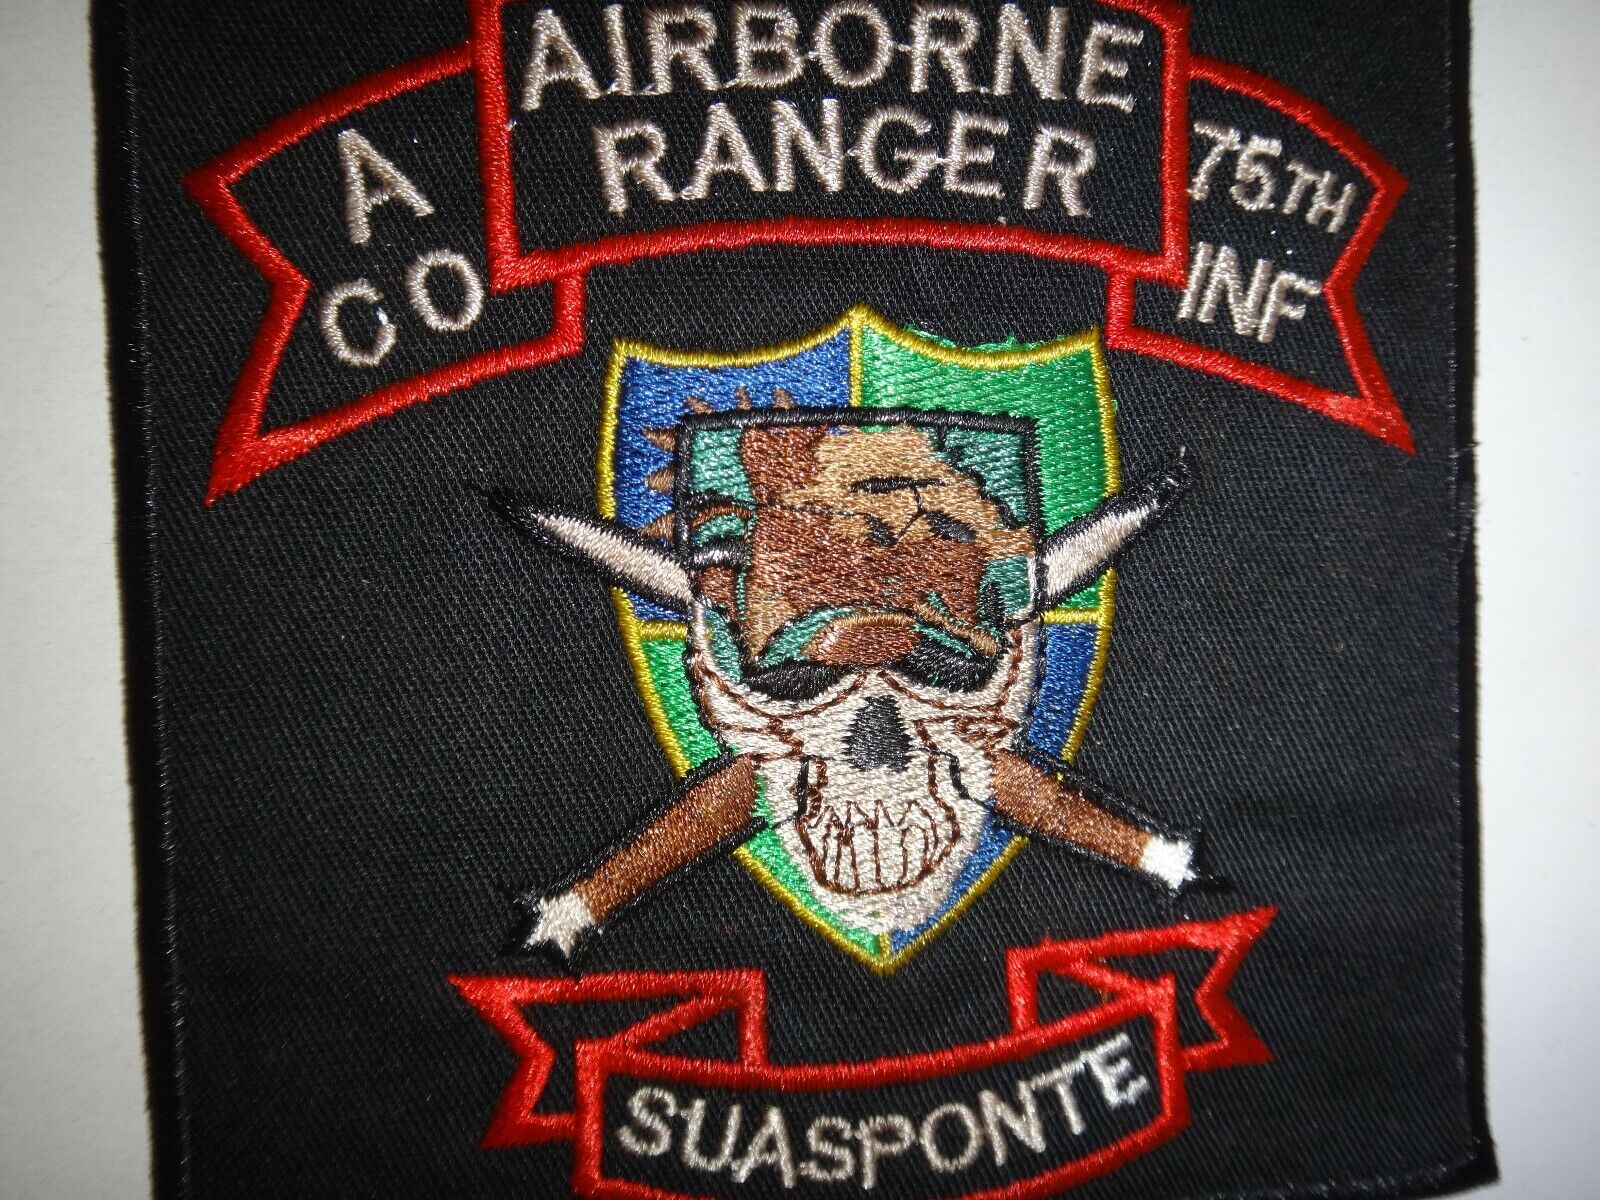 US A Company 75th Infantry Regiment AIRBORNE RANGER, V Corps Germany SUA SPONTE